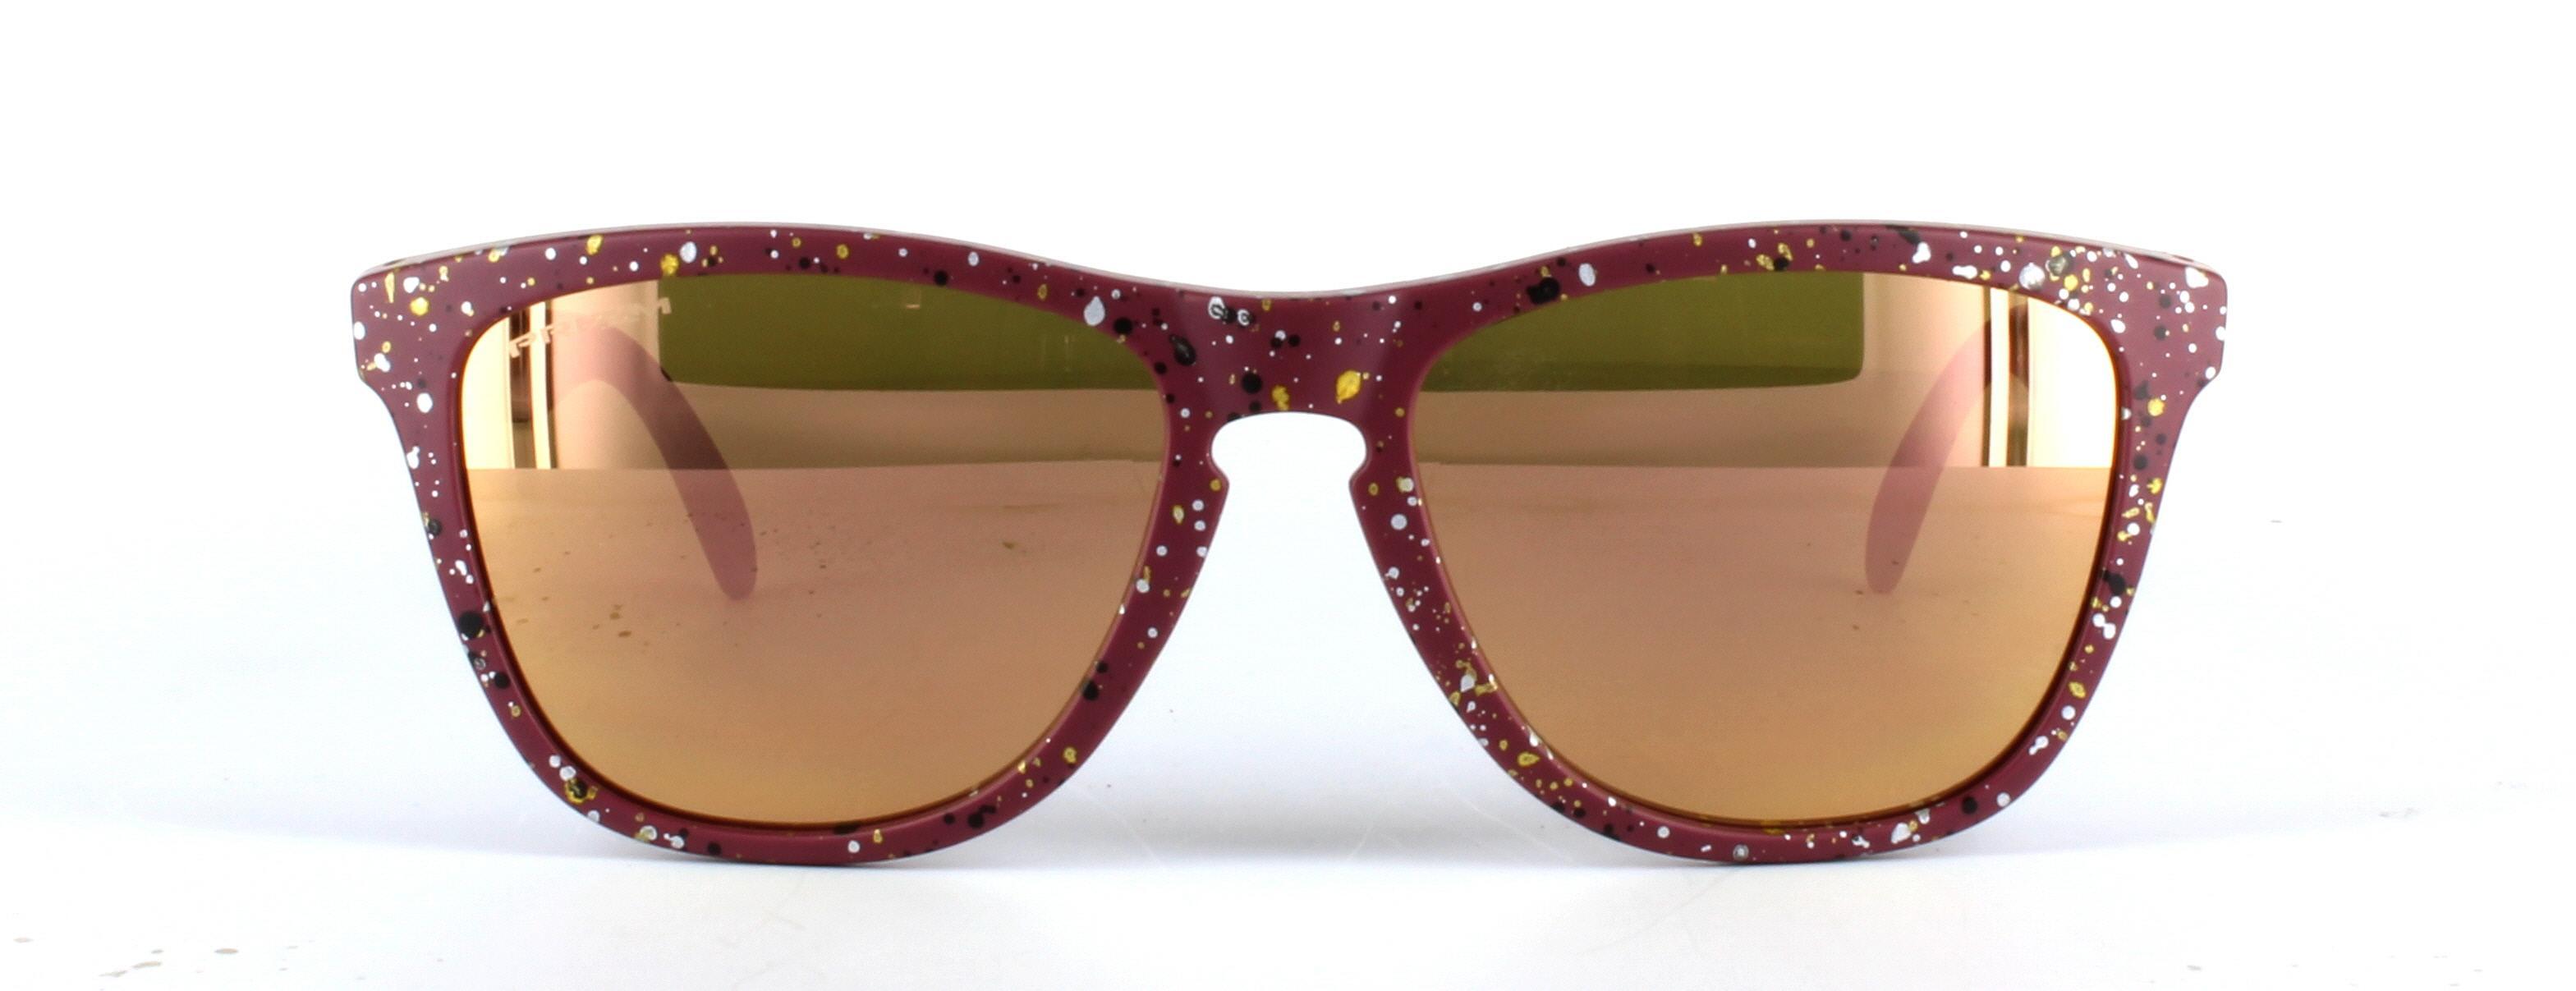 Oakley (O9428) Red Full Rim Rectangular Plastic Sunglasses - Image View 5